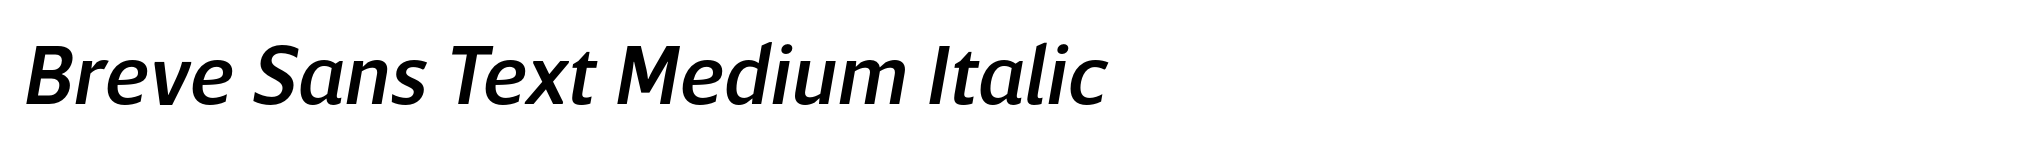 Breve Sans Text Medium Italic image